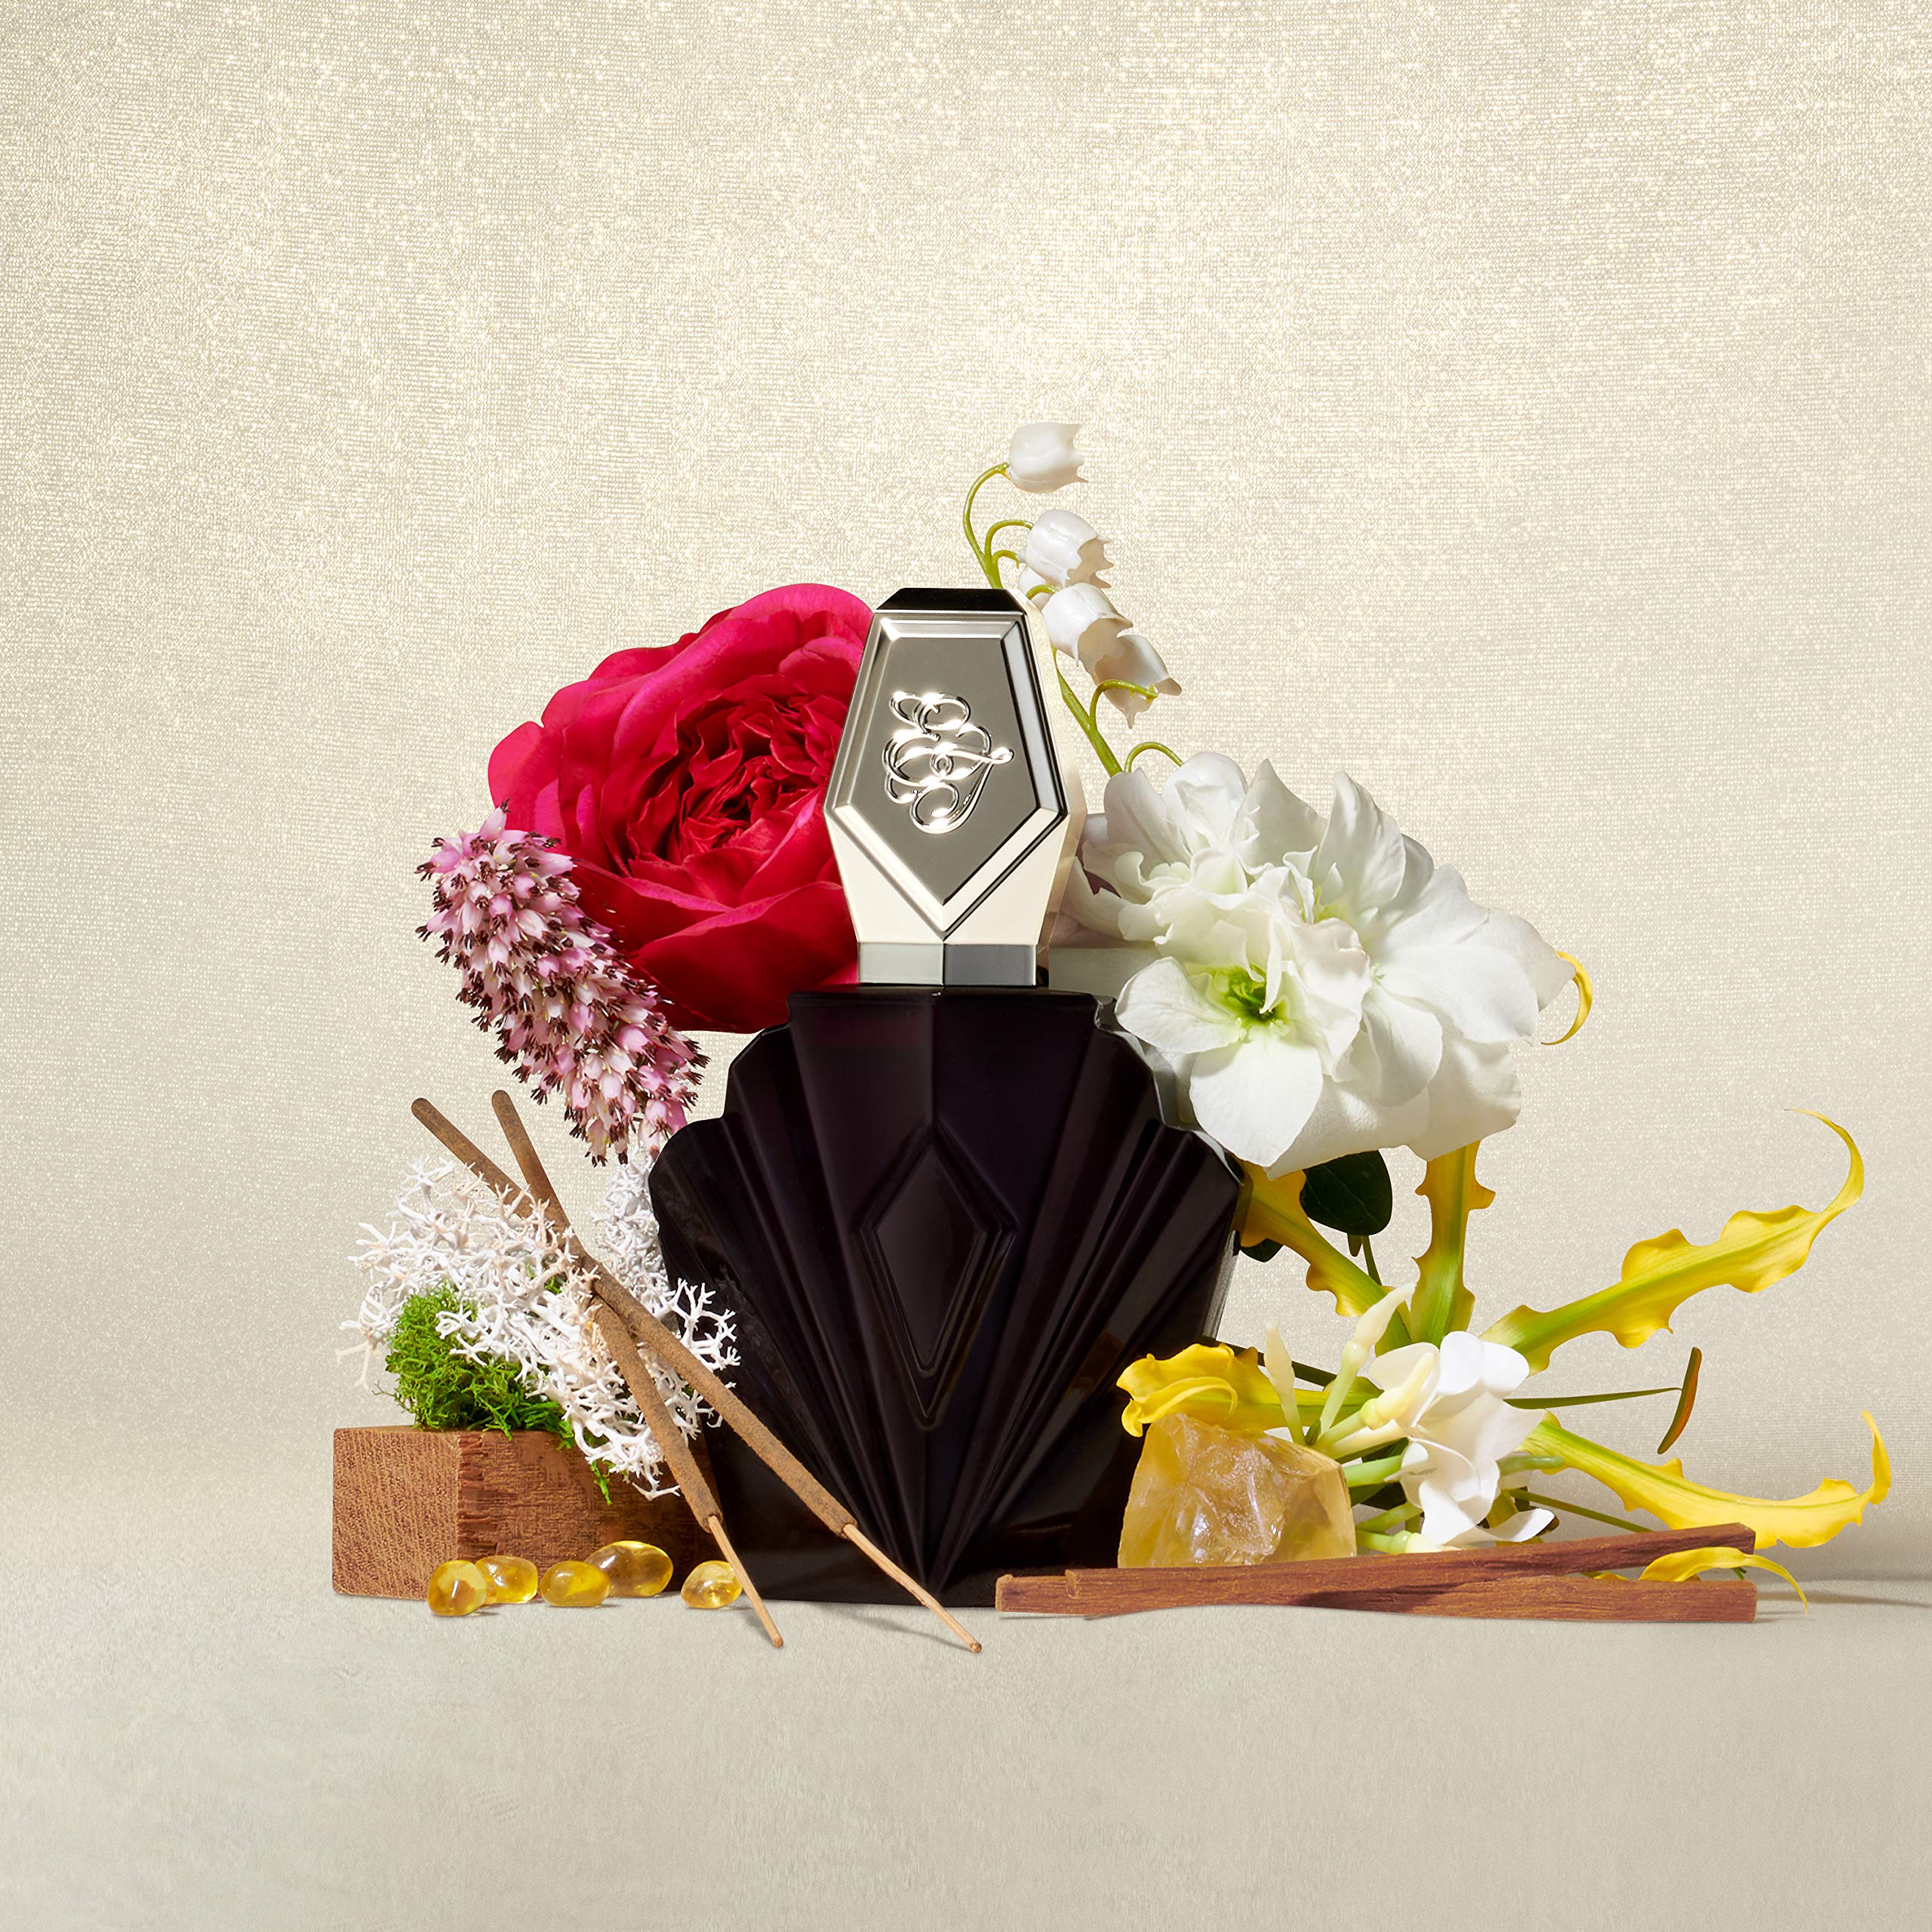 Elizabeth Taylor Passion Women's Fragrance Gift Set, 1.5 Fl Oz